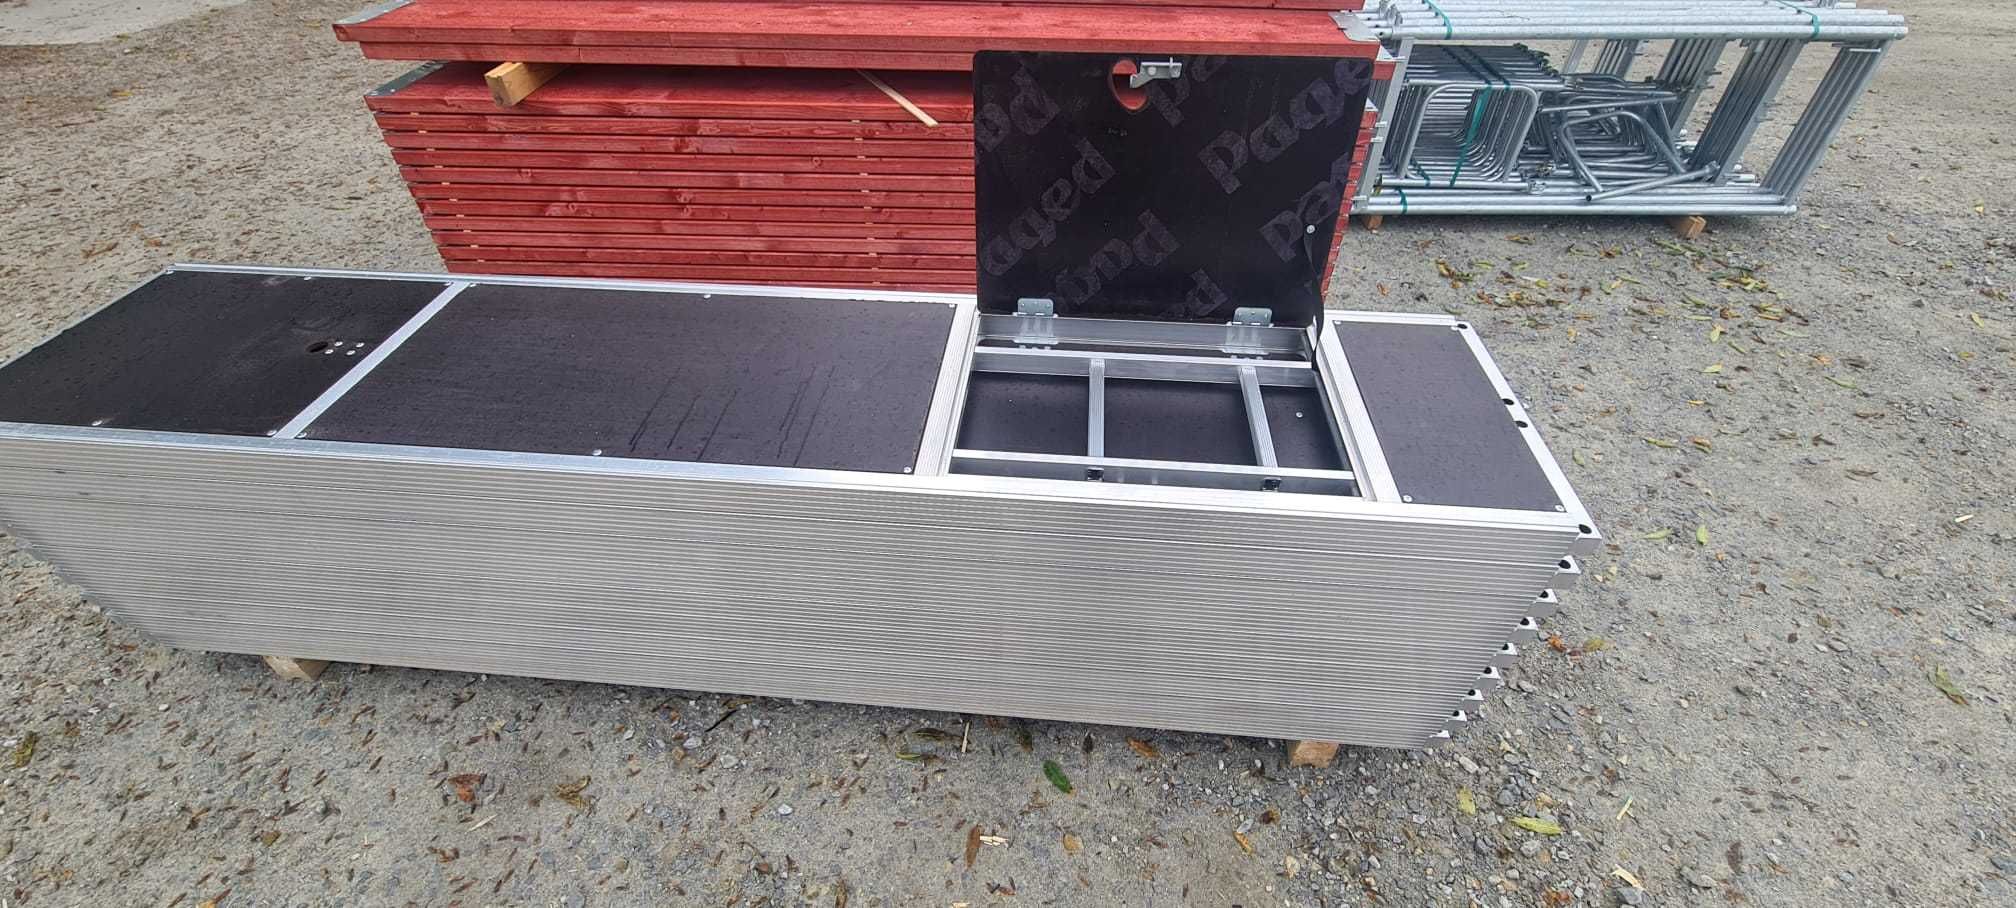 Rusztowanie fasadowe aluminiowe typ Plettac - LEKKIE-- 125 m2---NOWE